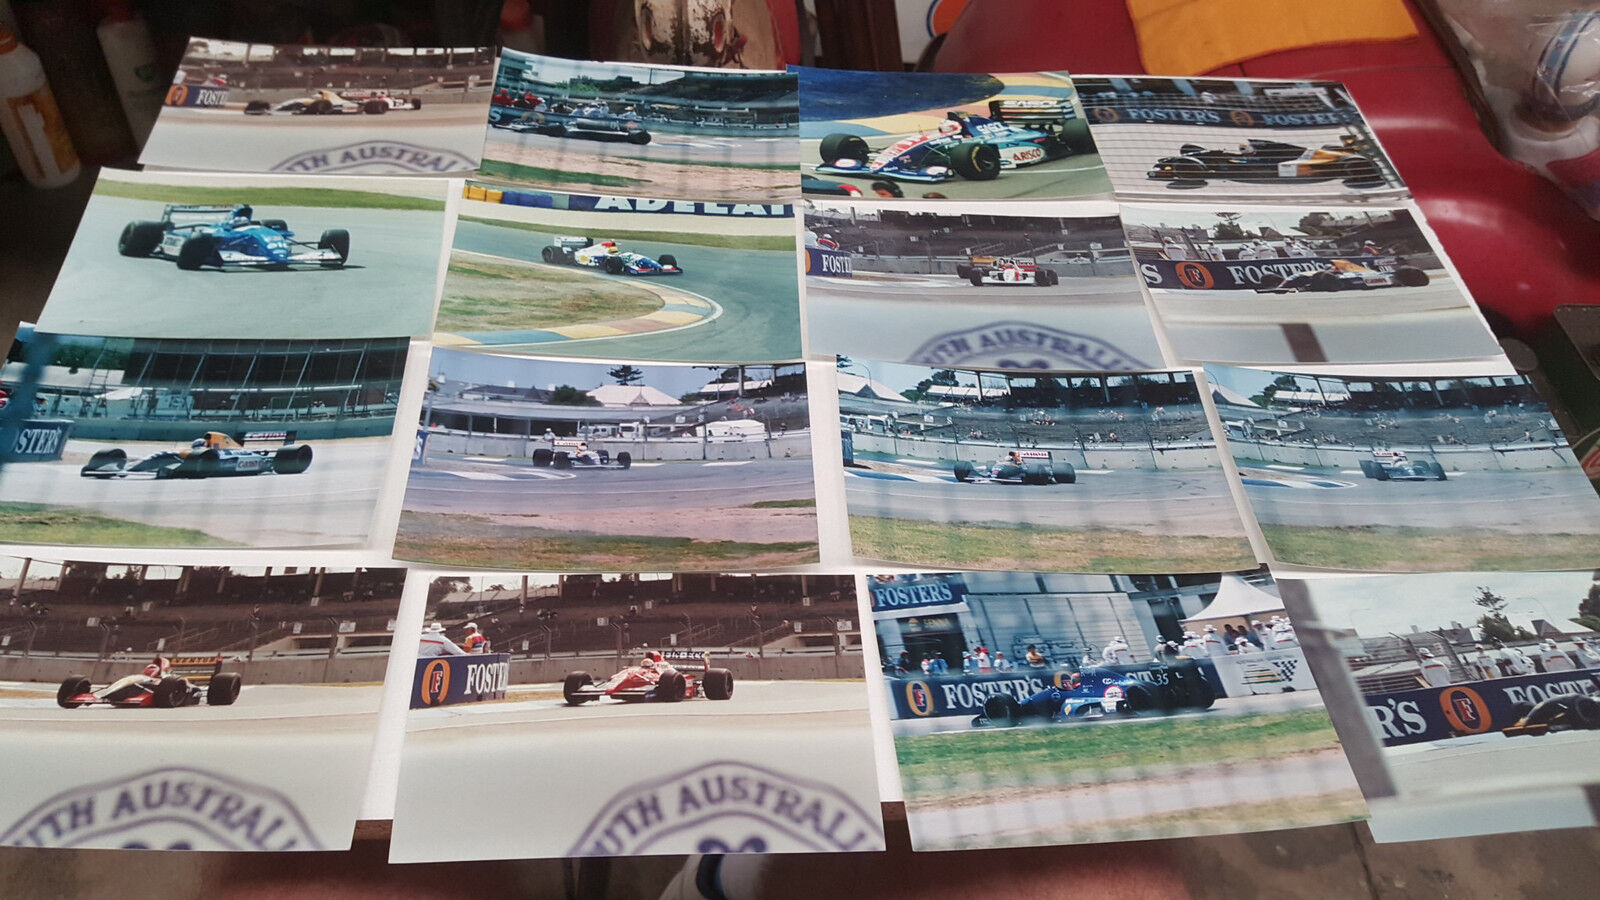 1993 ADELAIDE Formula 1 Grand Prox Race PHOTOS x 20   Lot 1